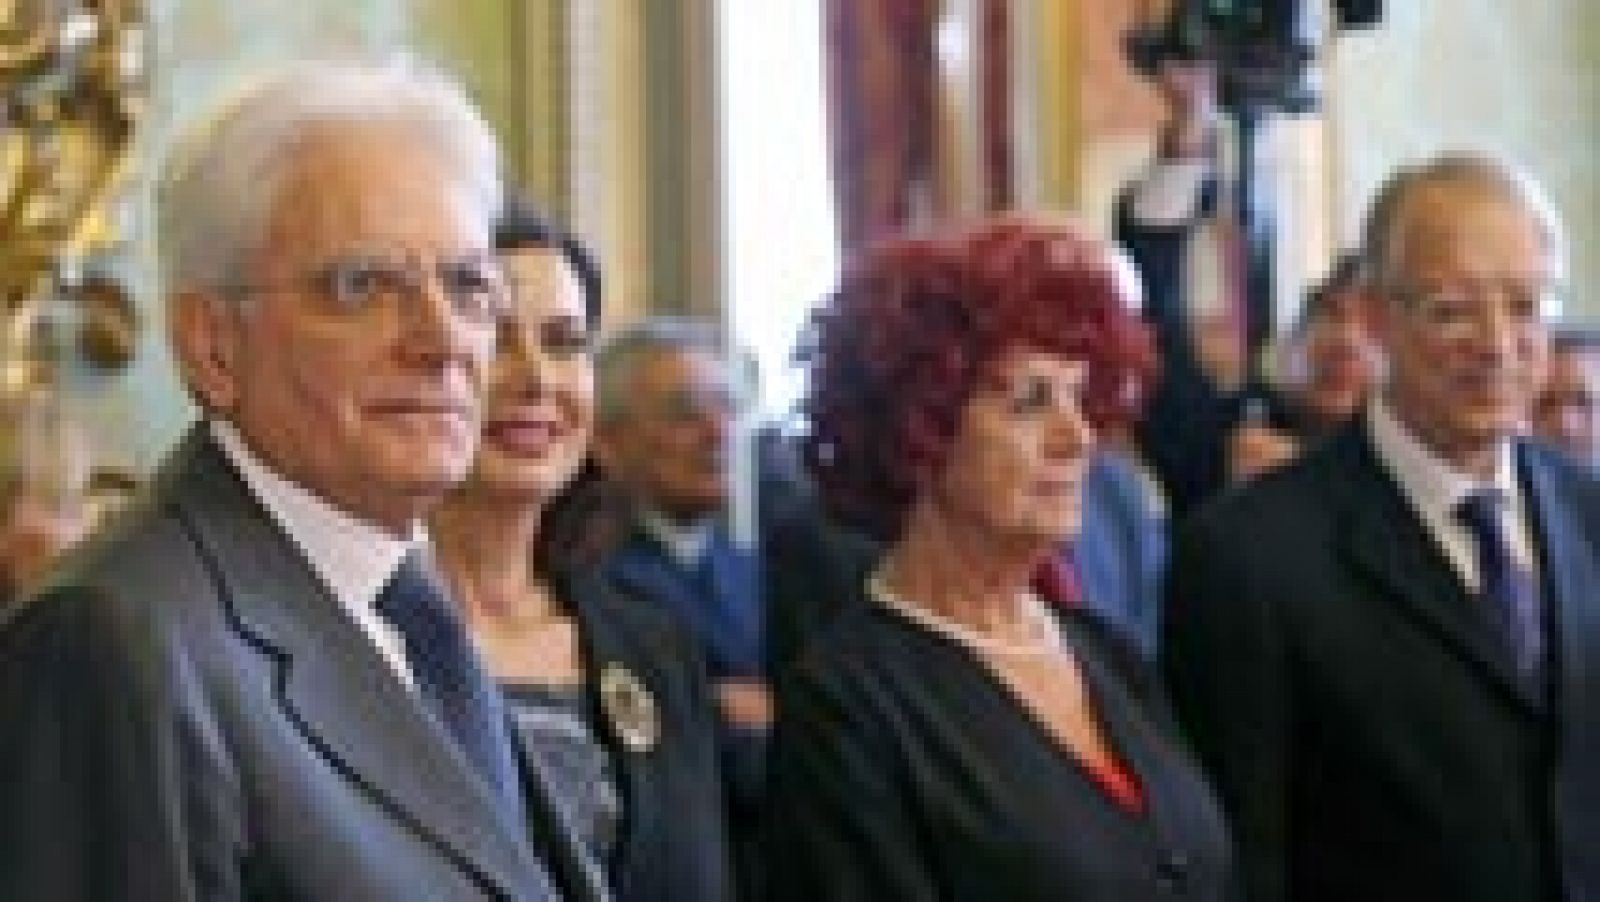 Telediario 1: Sergio Mattarella es el nuevo presidente de Italia | RTVE Play